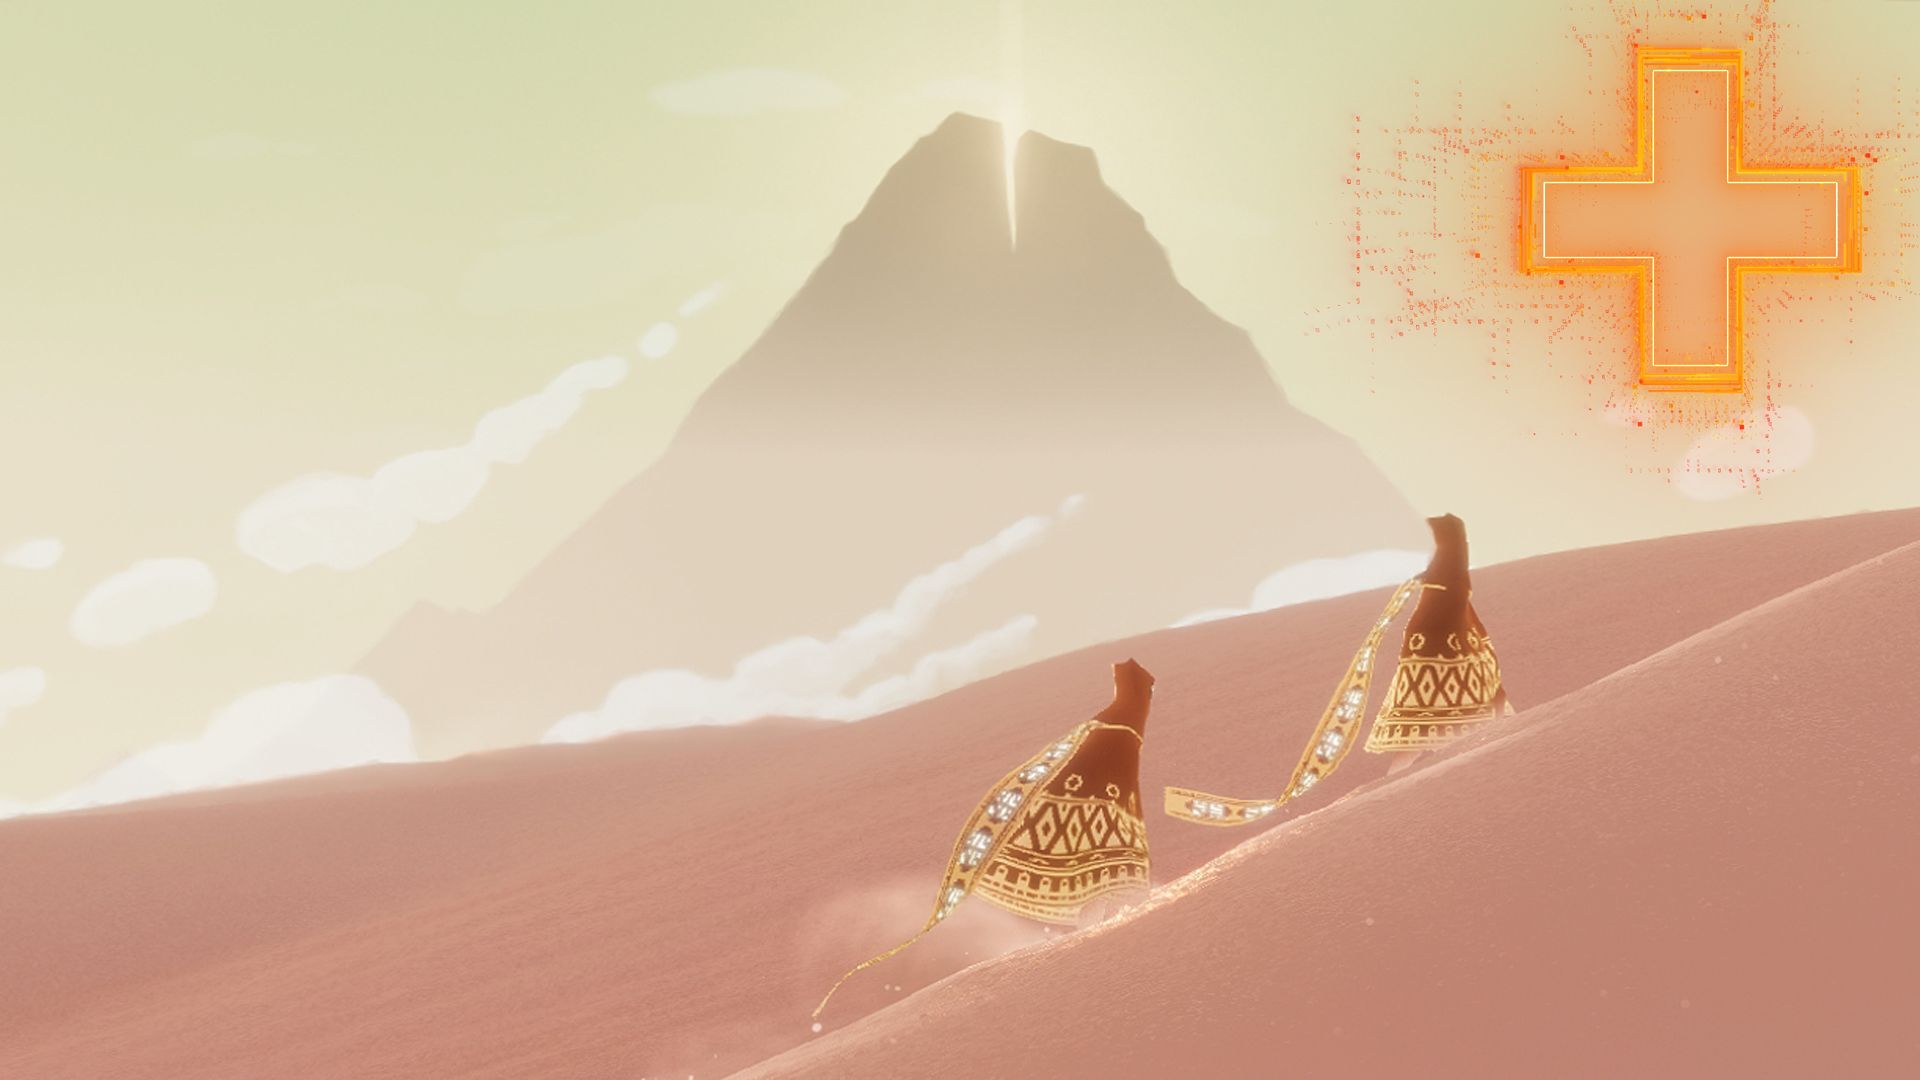 Full journey. Journey игра. Journey (игра, 2012). Journey пустыня ps4 Скриншоты thatgamecompany. Джорни путешествие игра.